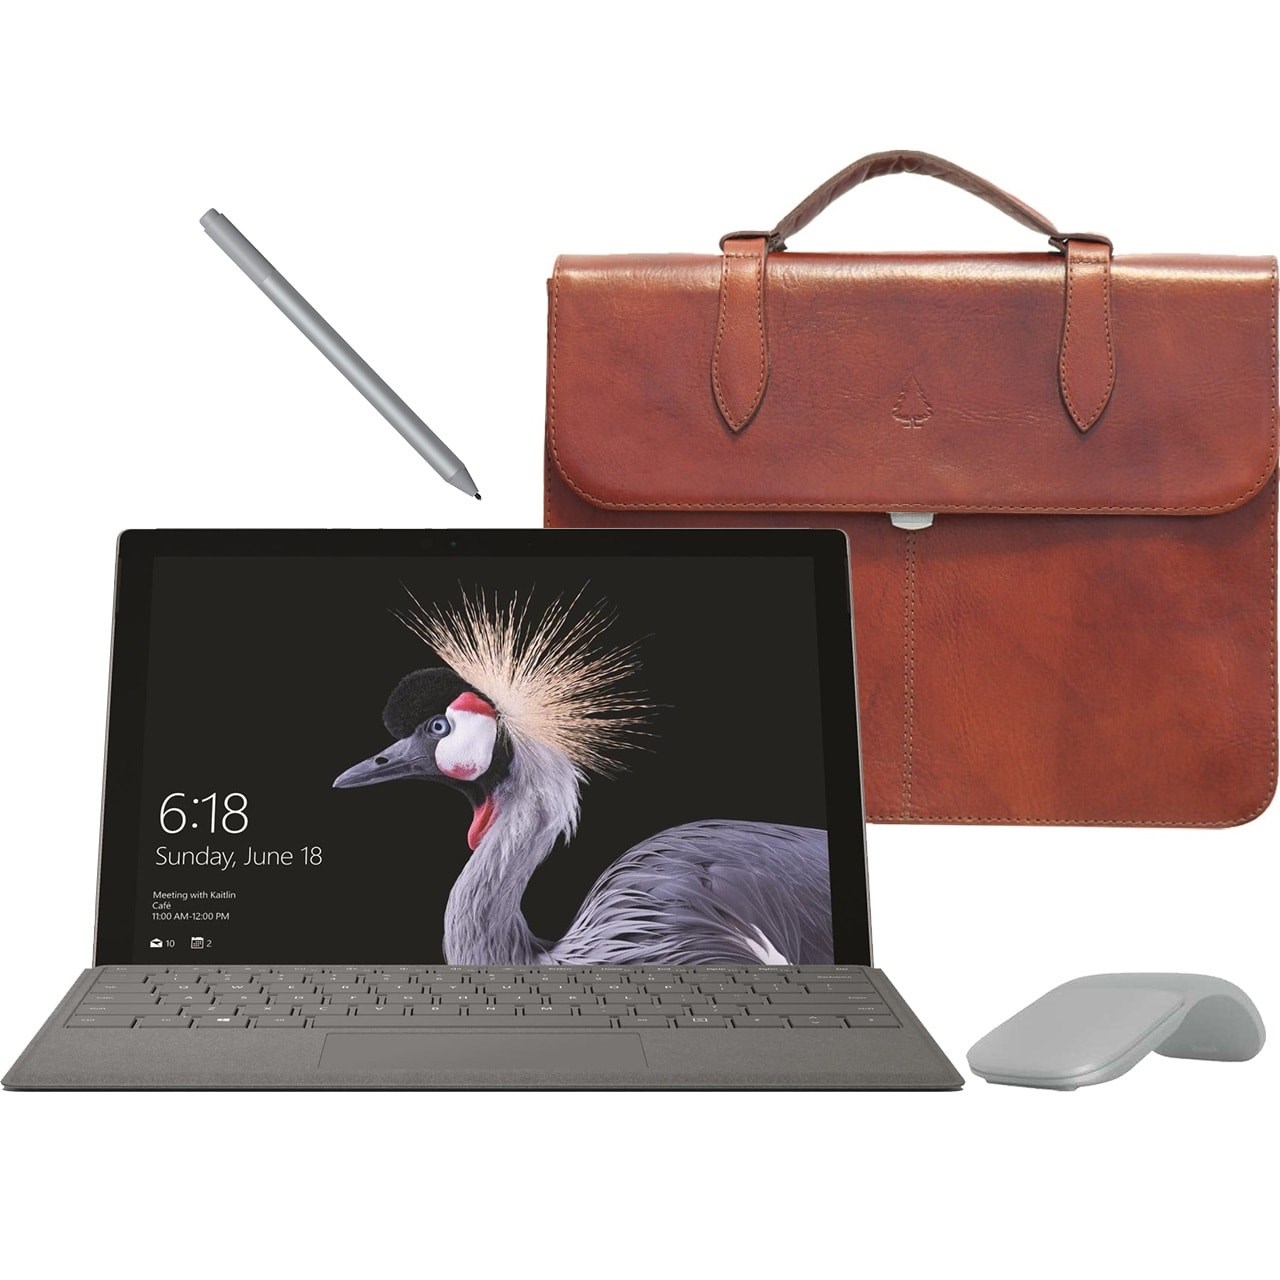 تبلت مایکروسافت مدل Surface Pro 2017 - E به همراه کیبورد و قلم و ماوس 2017  رنگ پلاتینیوم و کیف چرم صنوبر  - ظرفیت 512 گیگابایت